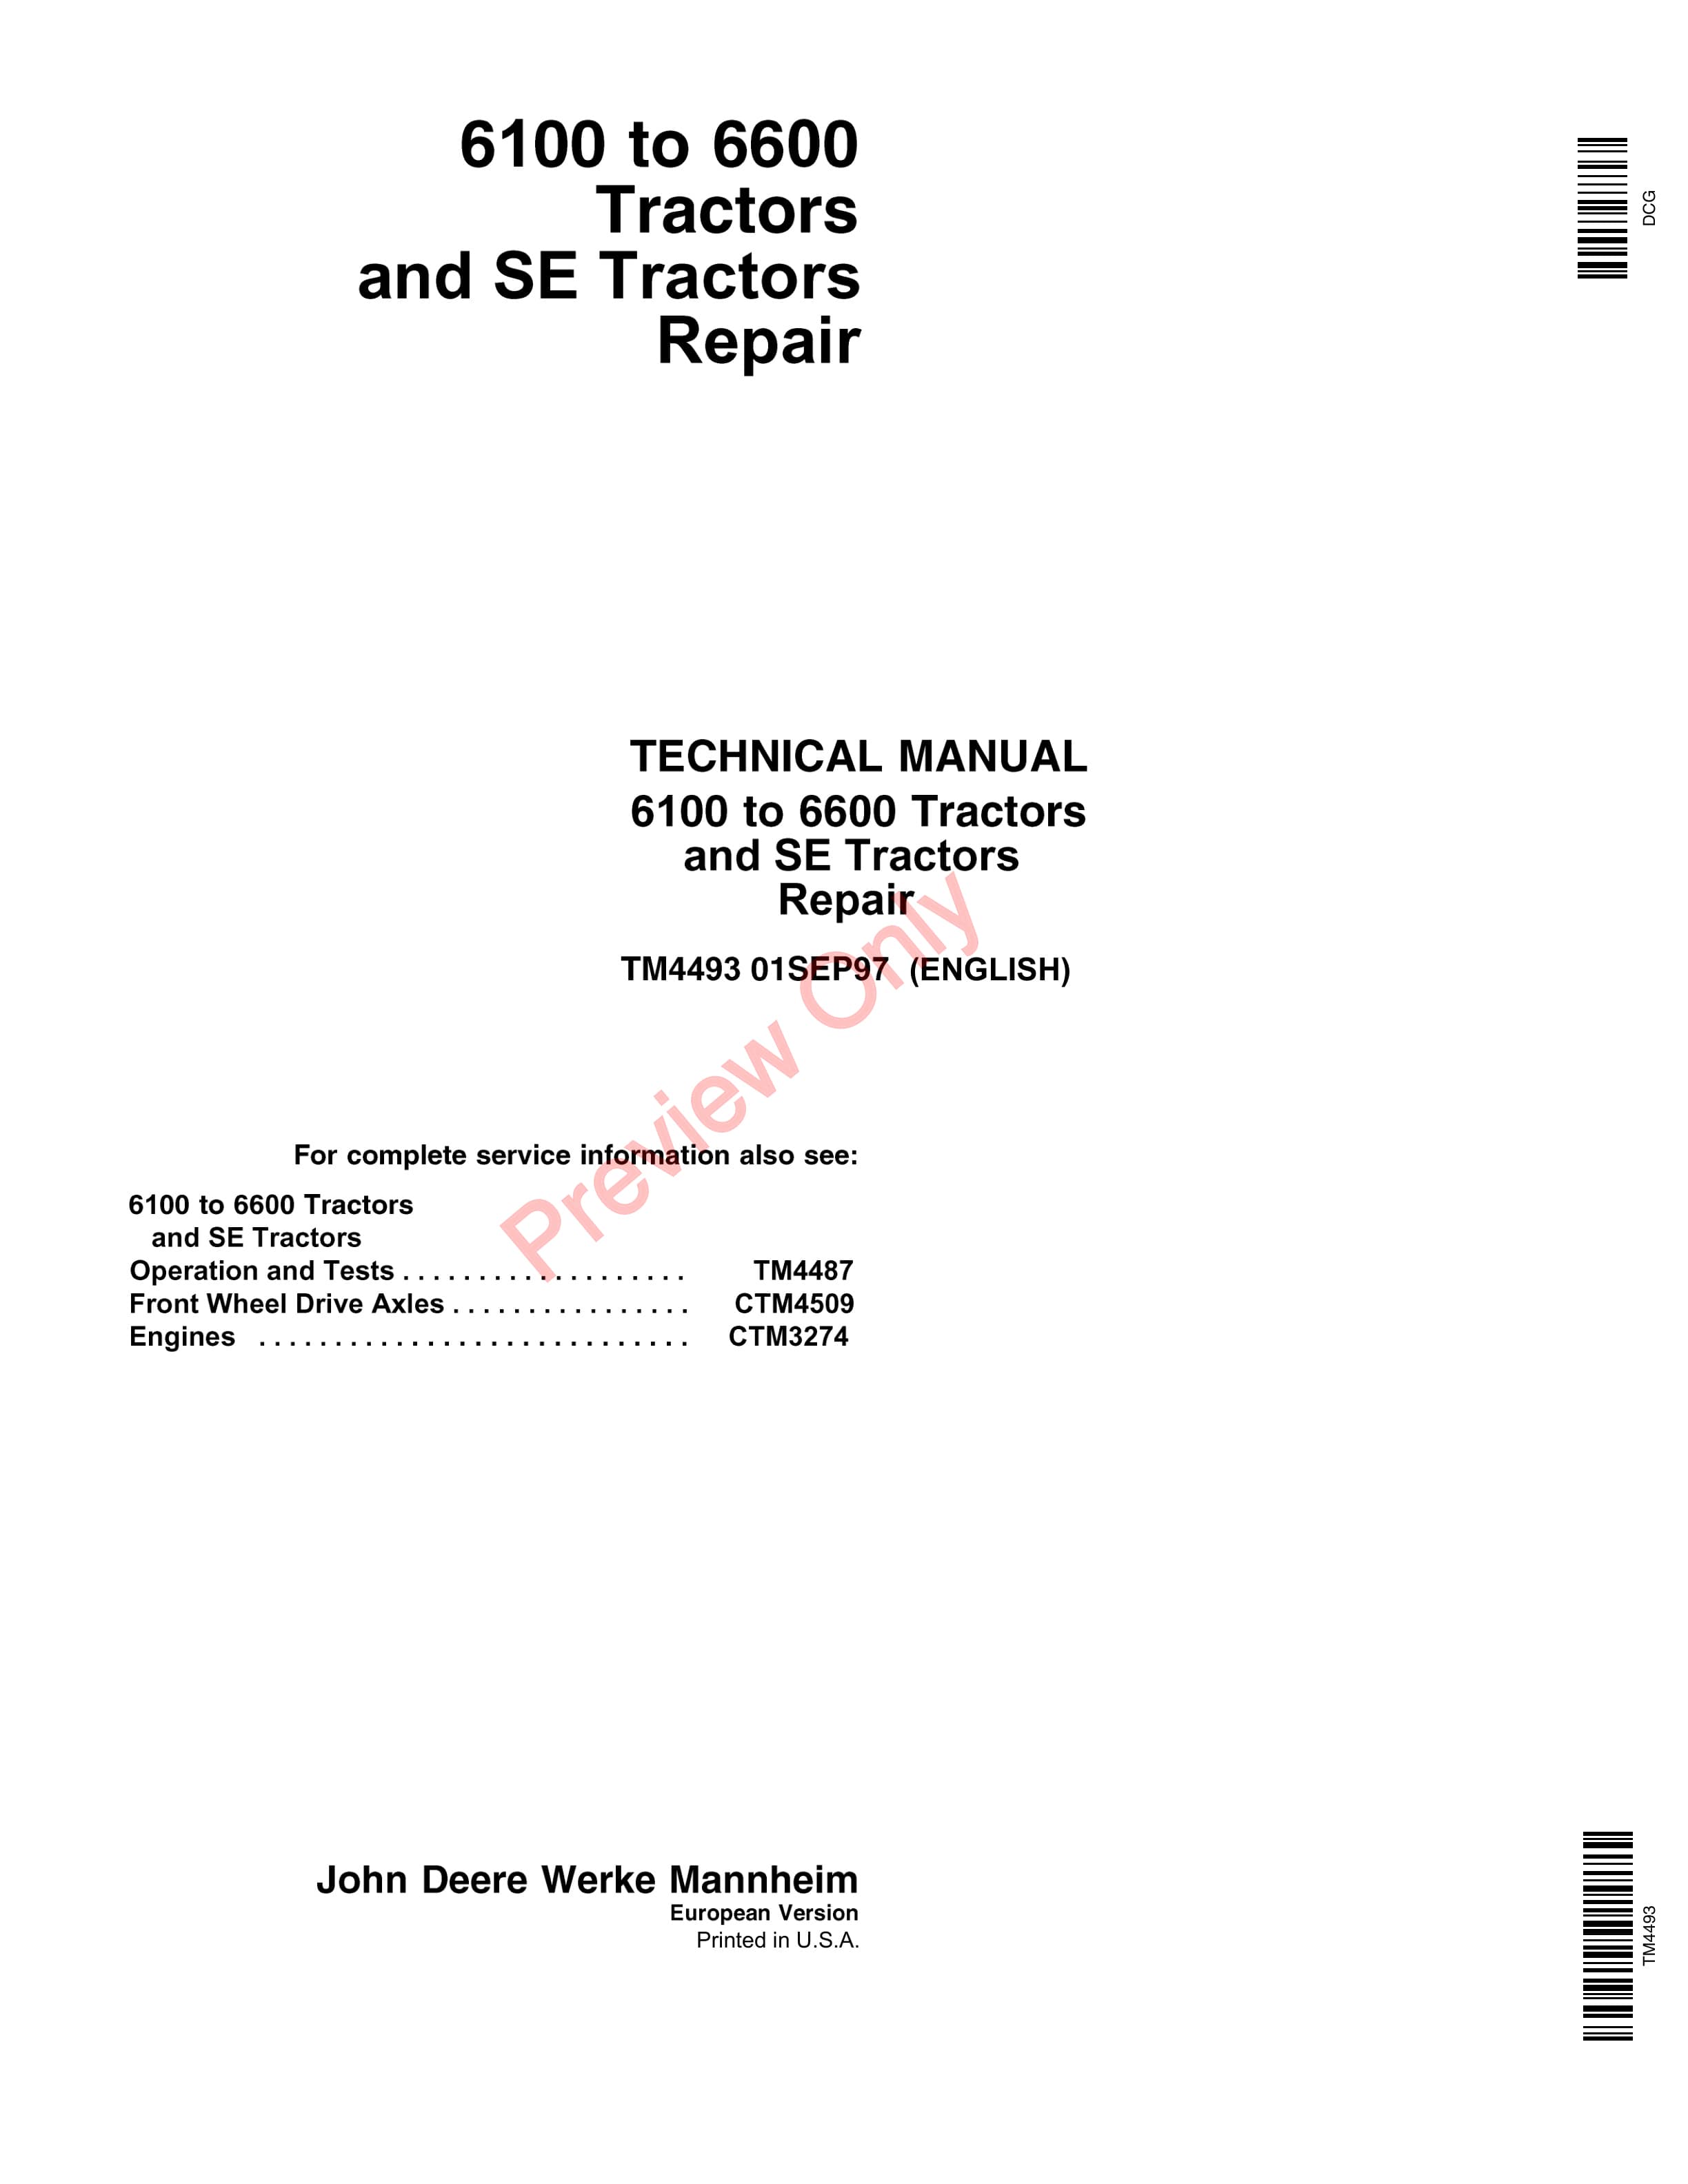 John Deere 6100 to 6600 Tractors and SE Tractors Technical Manual TM4493 01SEP97-1